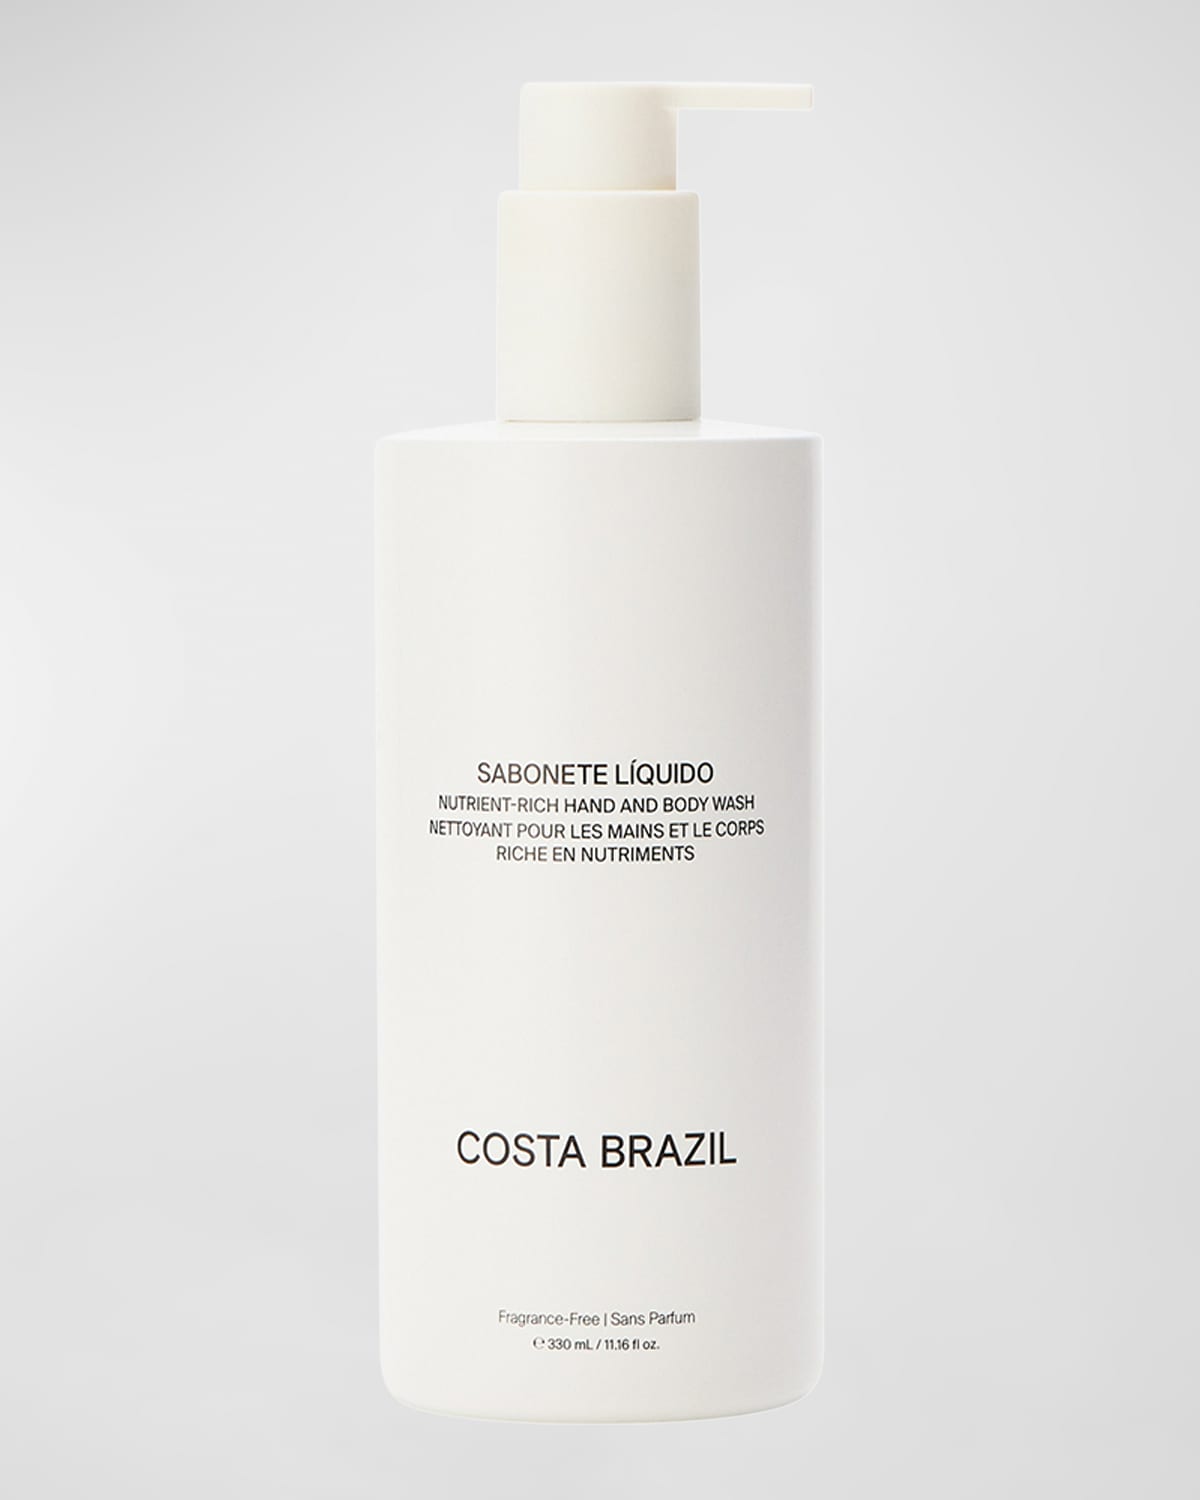 Costa Brazil Sabonete Liquido Nutrient Rich Hand and Body Wash, 11 oz. - Fragrance Free